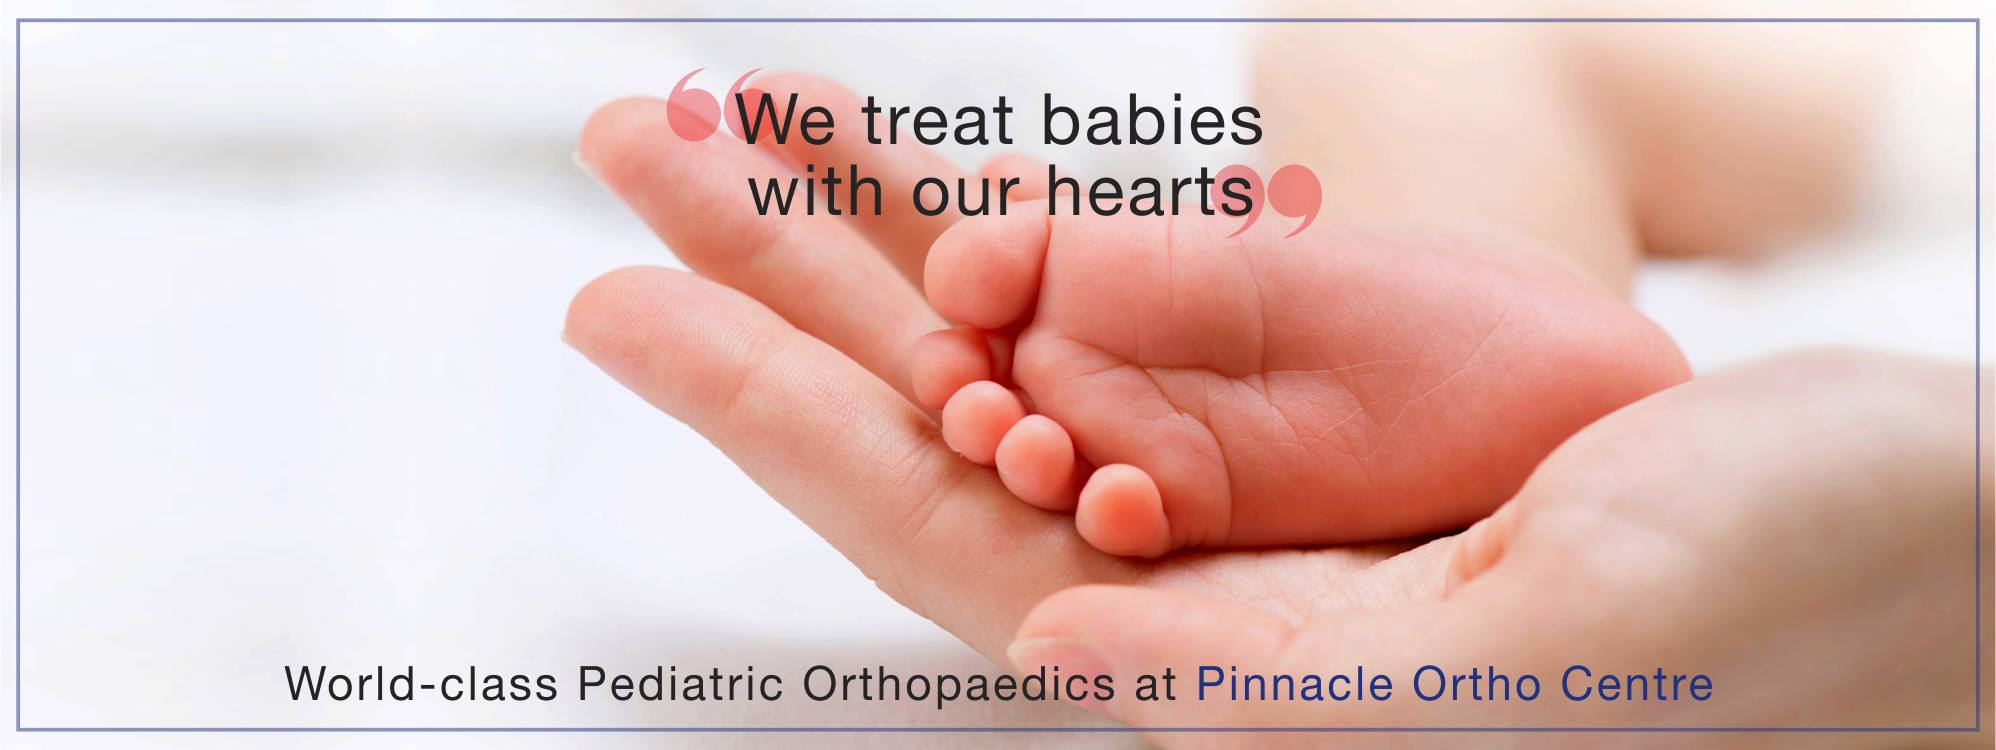 Pediatric orthopaedics